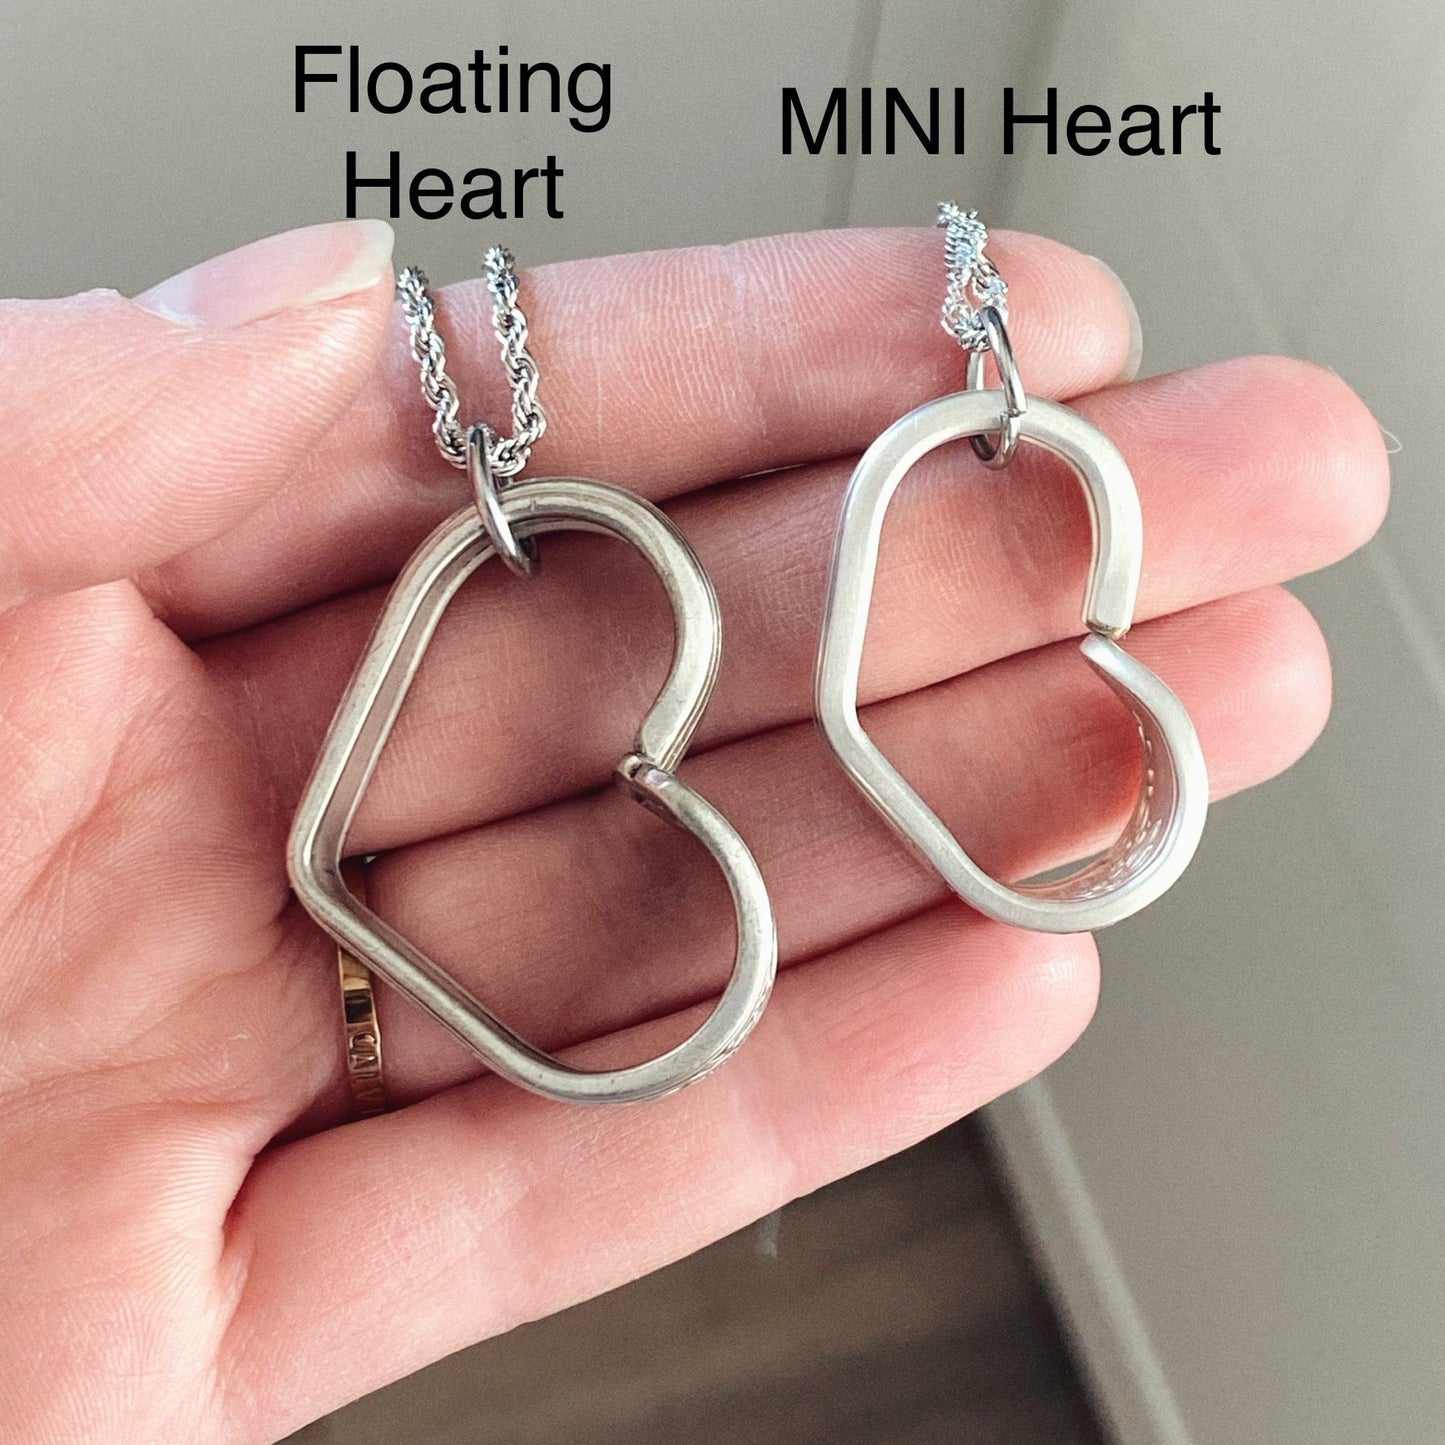 MINI Reflection 1959, Mini Floating Heart, Vintage Spoon Jewelry Hearts callistafaye   